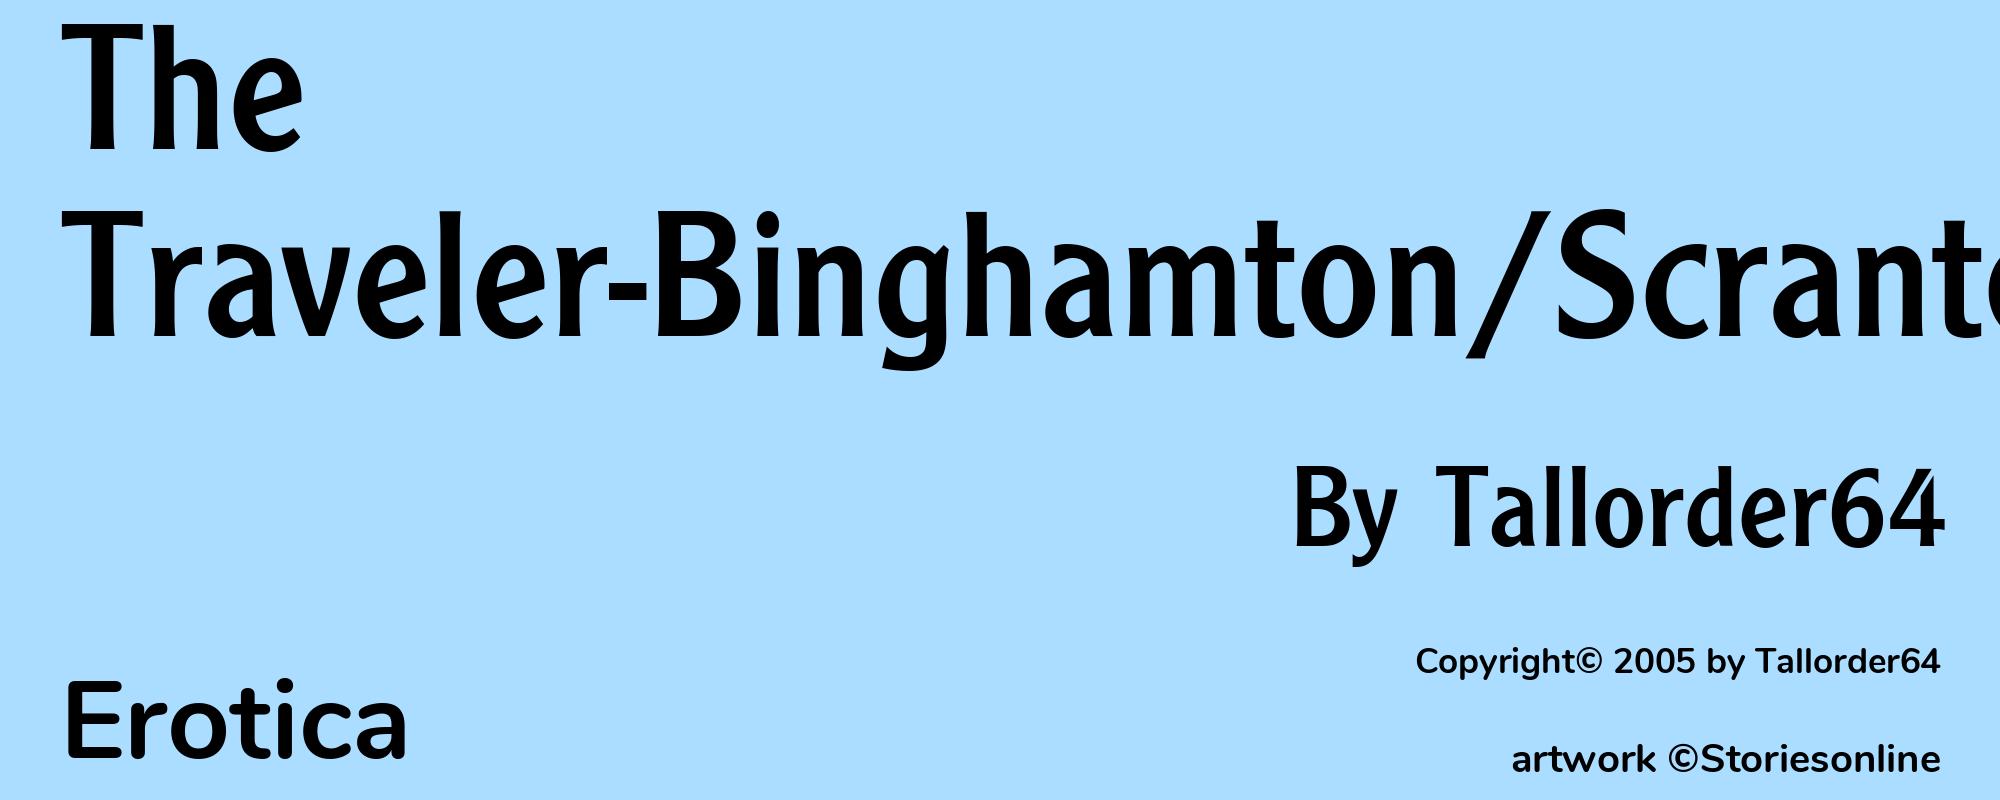 The Traveler-Binghamton/Scranton - Cover